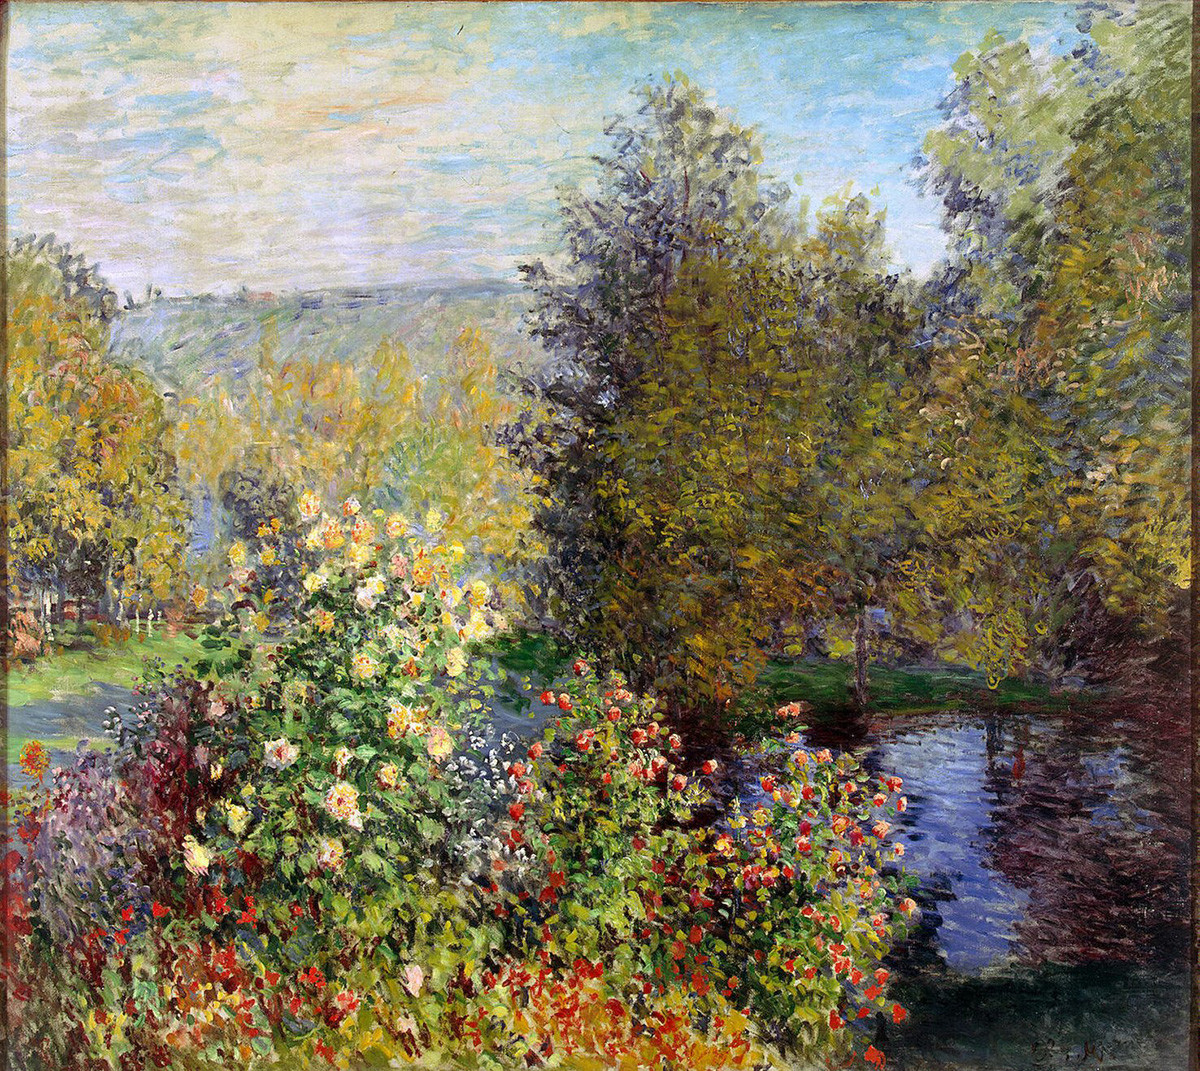 Angolo del giardino di Montgeron, Claude Monet